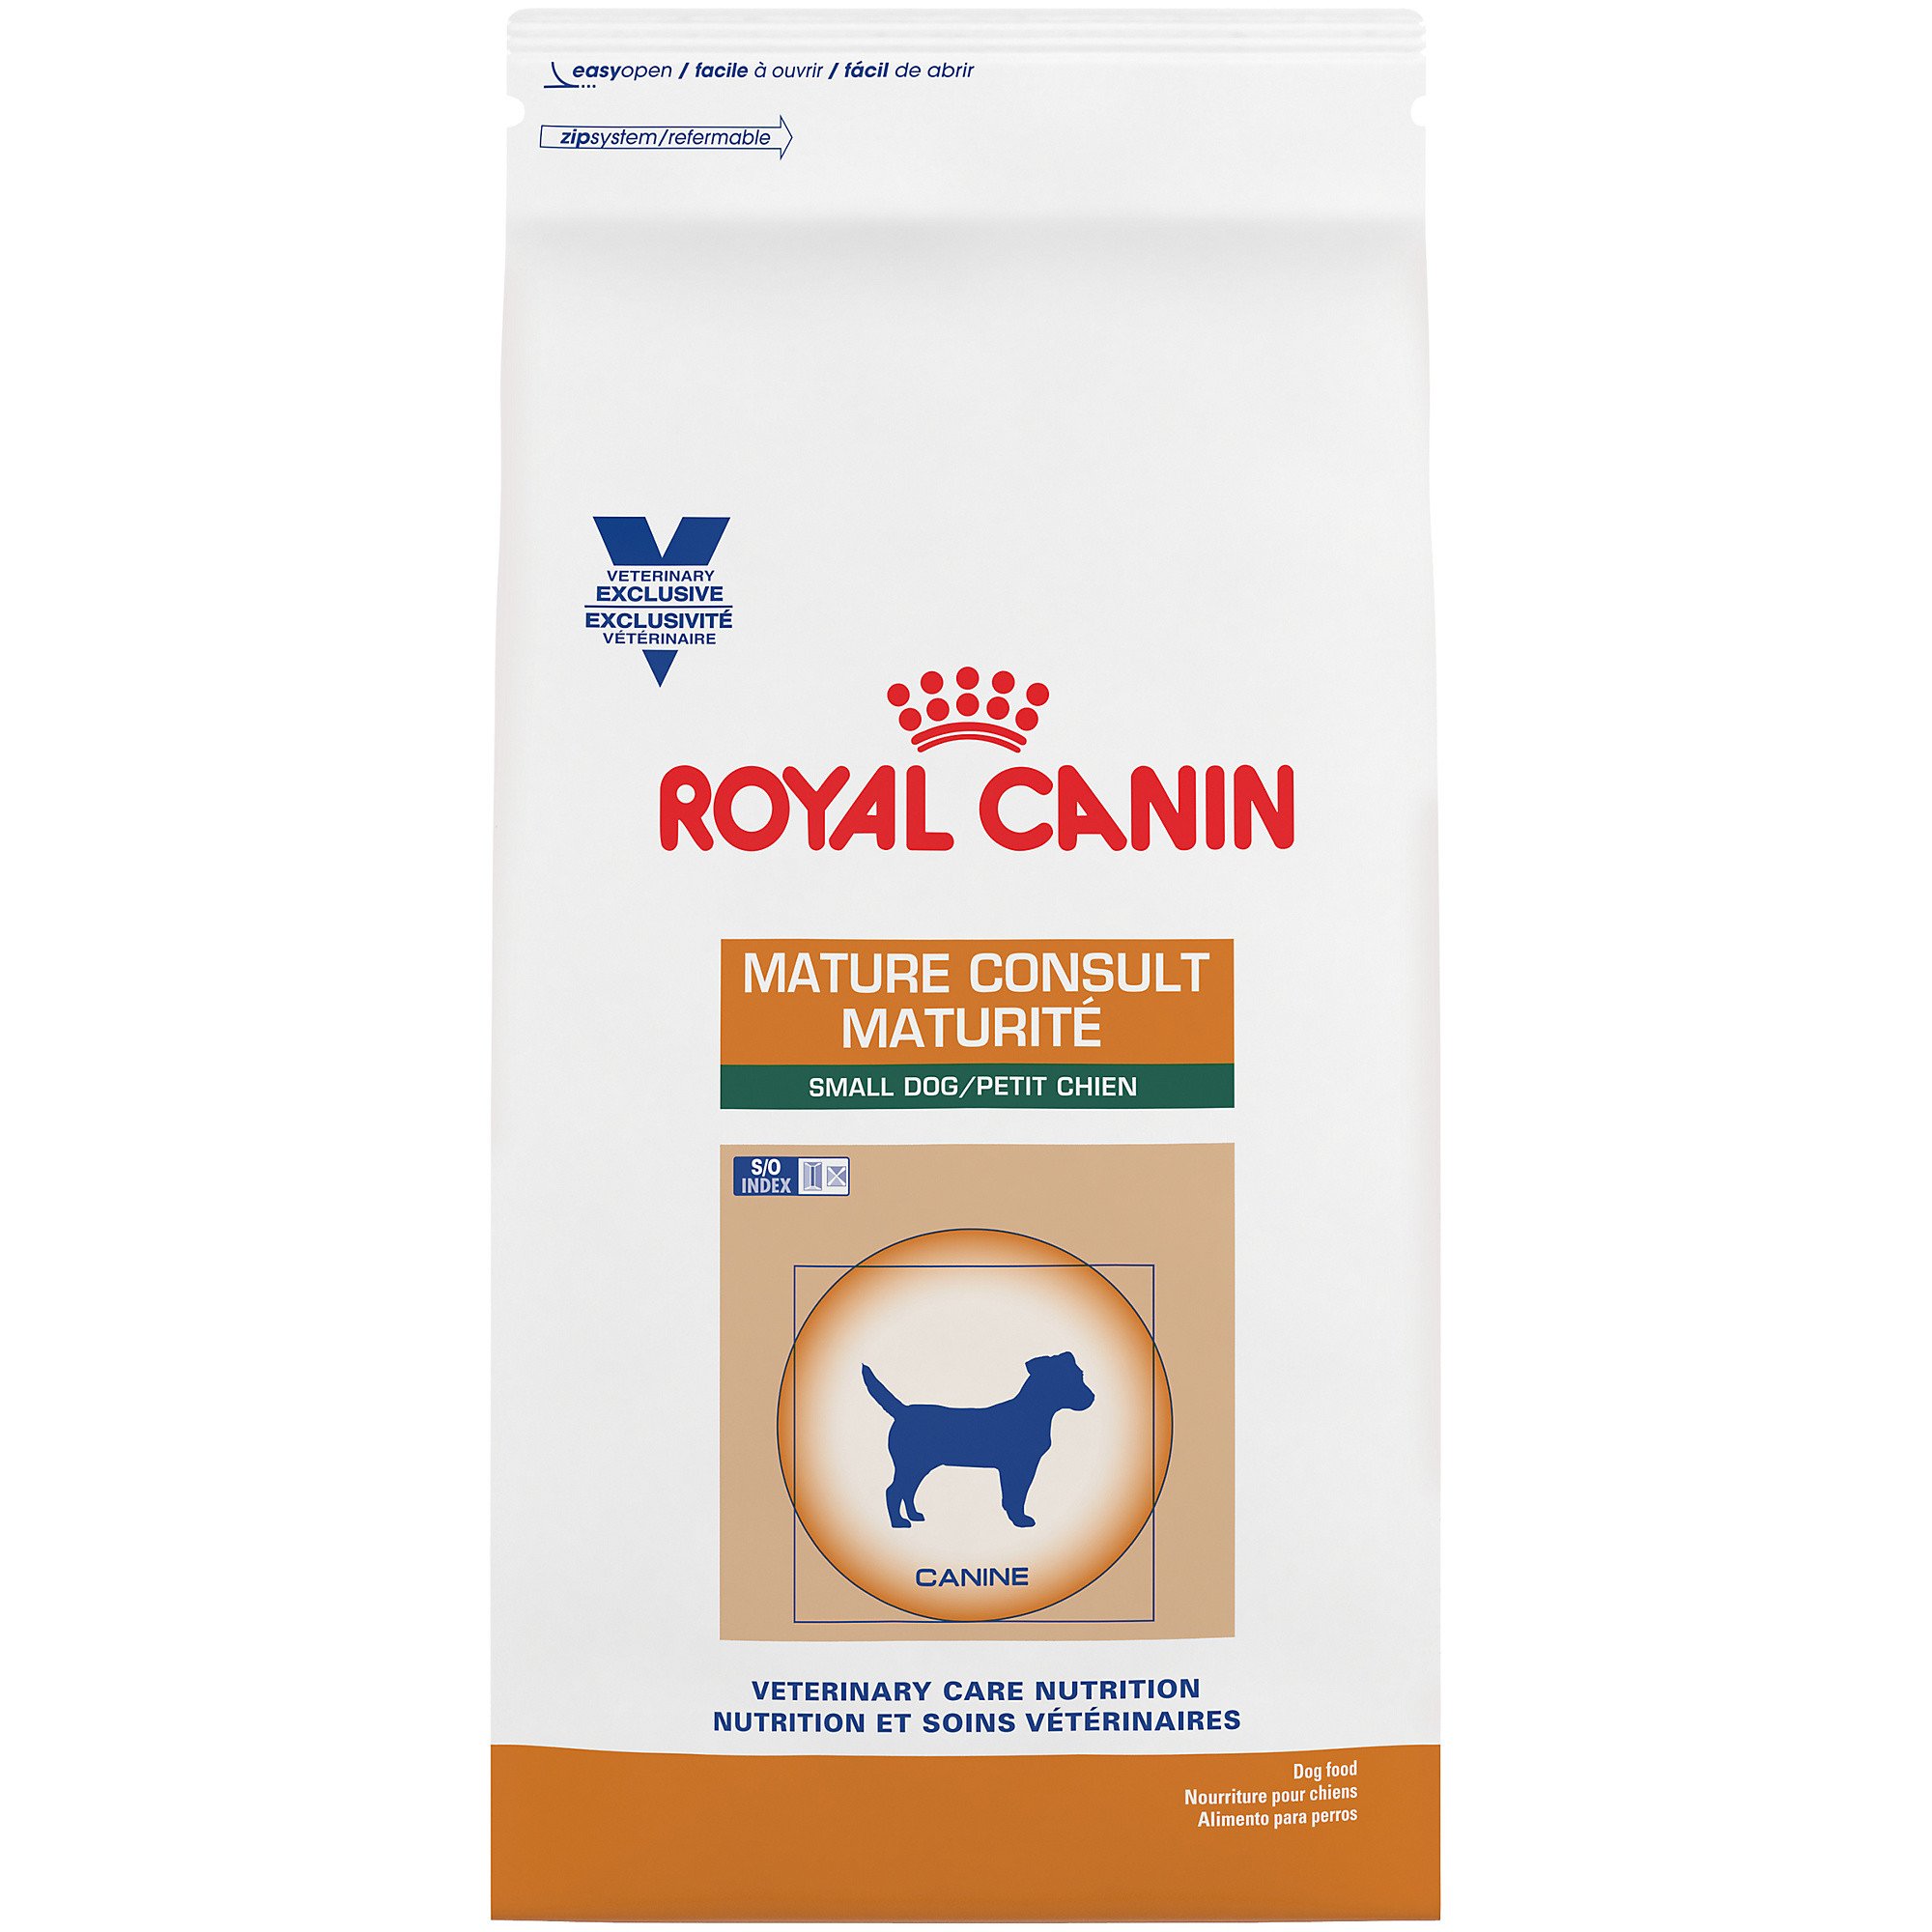 royal canin senior consult cat food